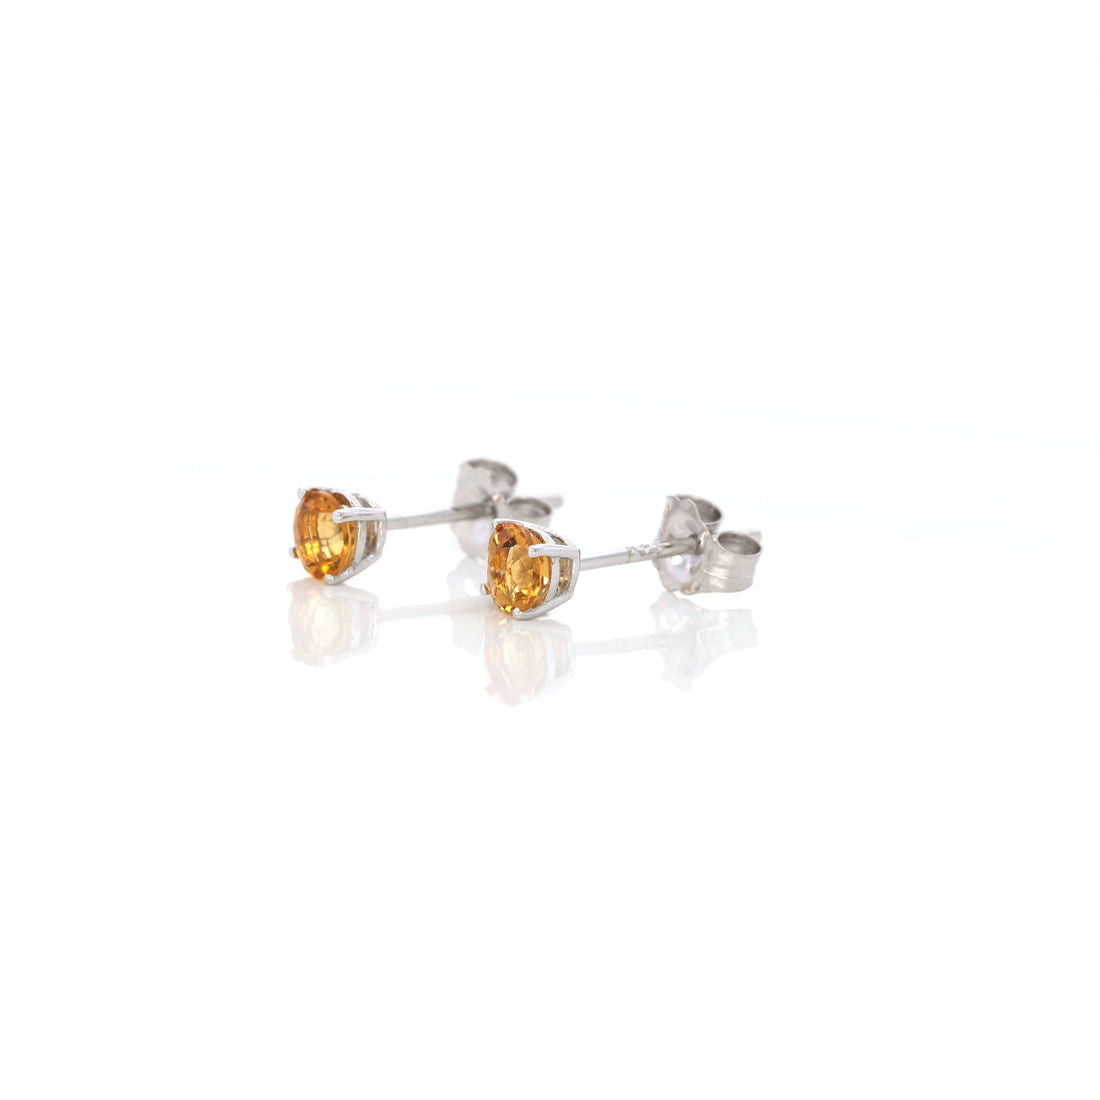 Baikalla Jewelry Gold Gemstone Earrings Baikalla 14k Classic White Gold Natural 4mm Citrine Stud Earrings